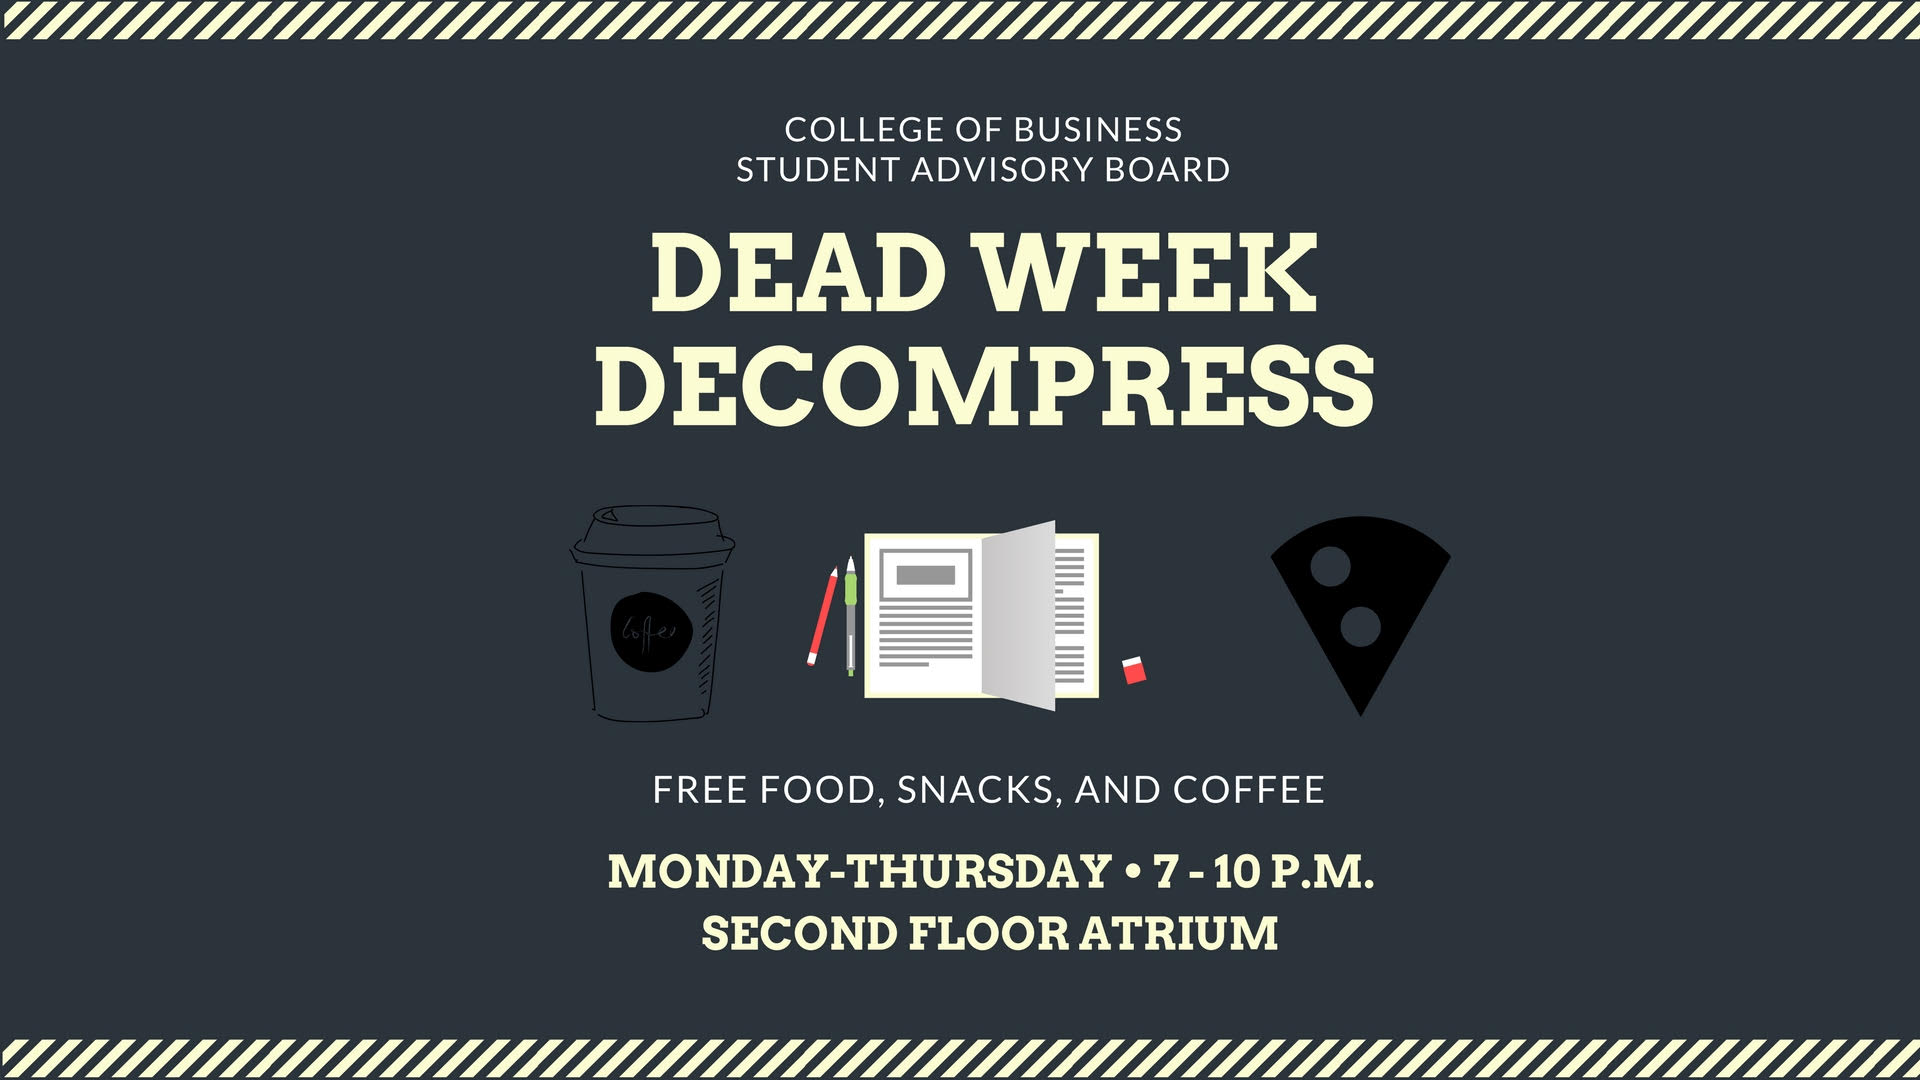 Dead Week Decompress Information